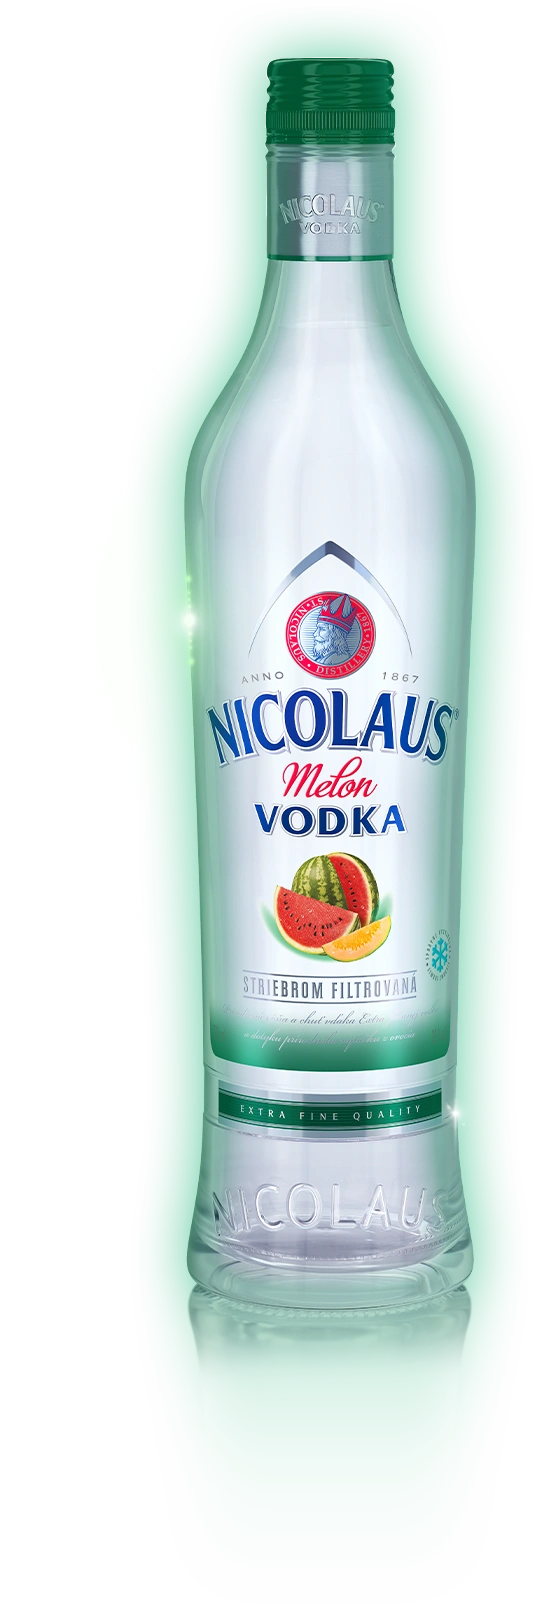 Nicolaus Melon vodka